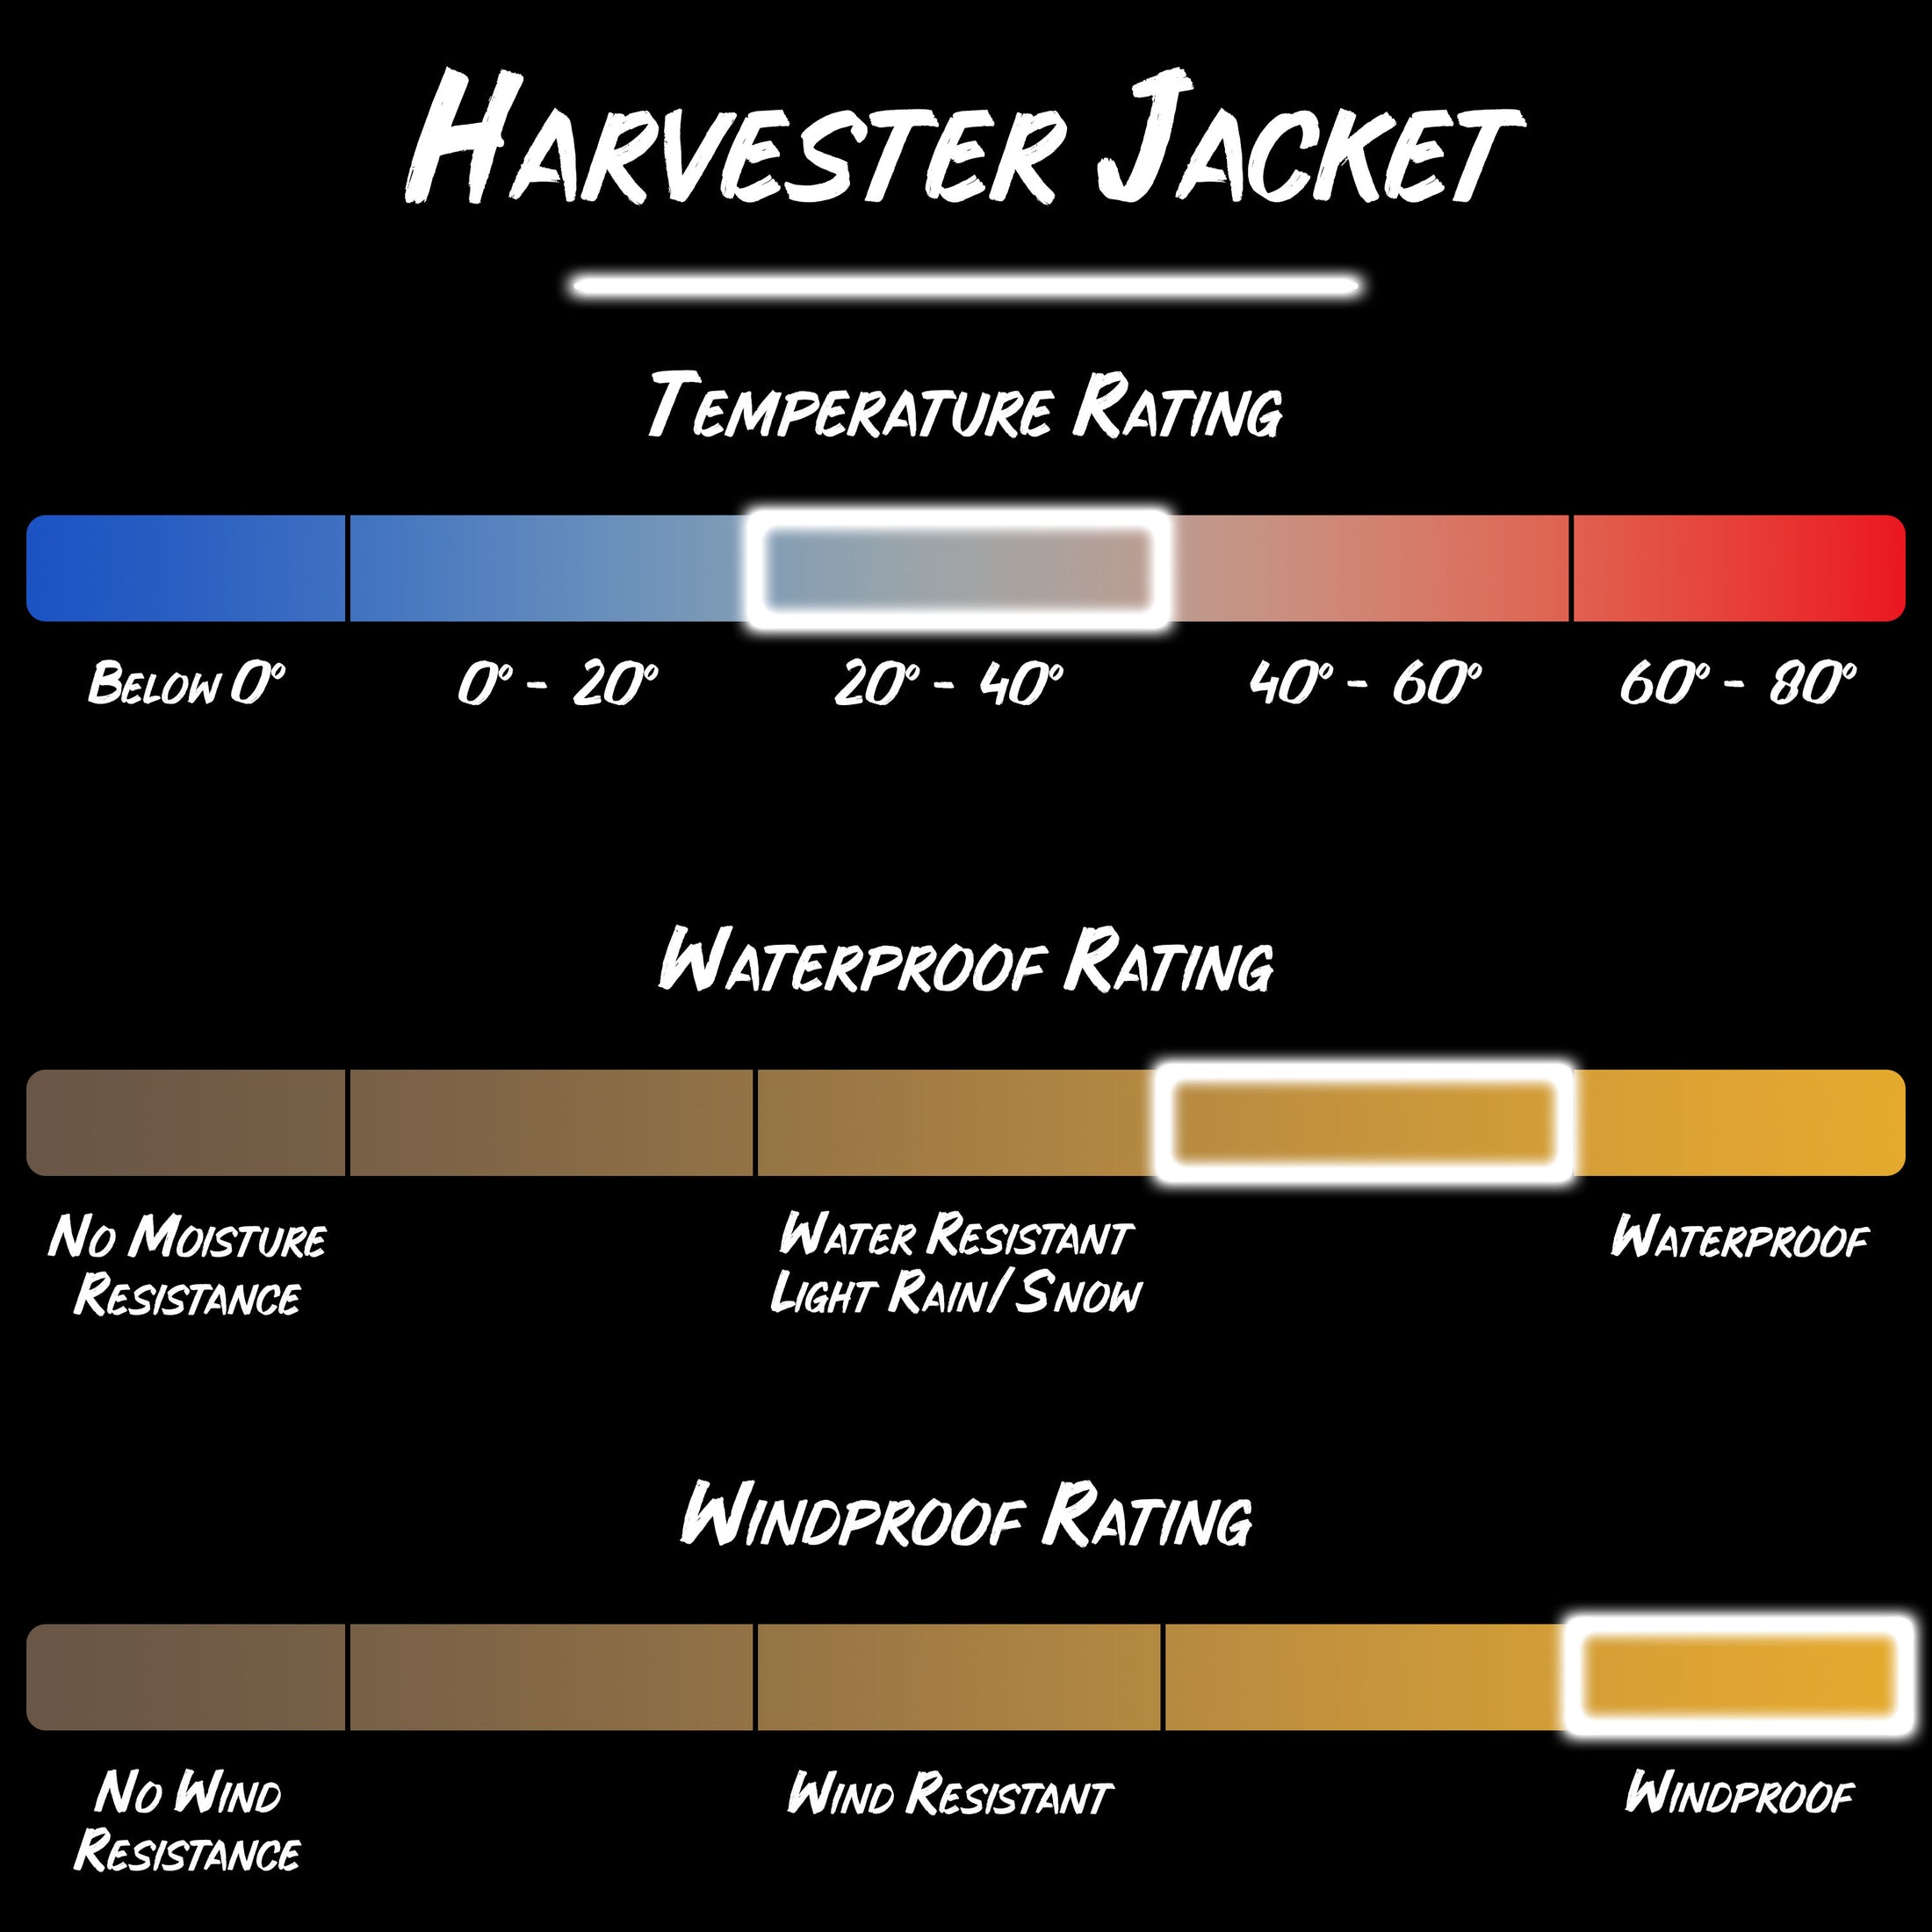 Gamekeeper harvester jacket product specifications